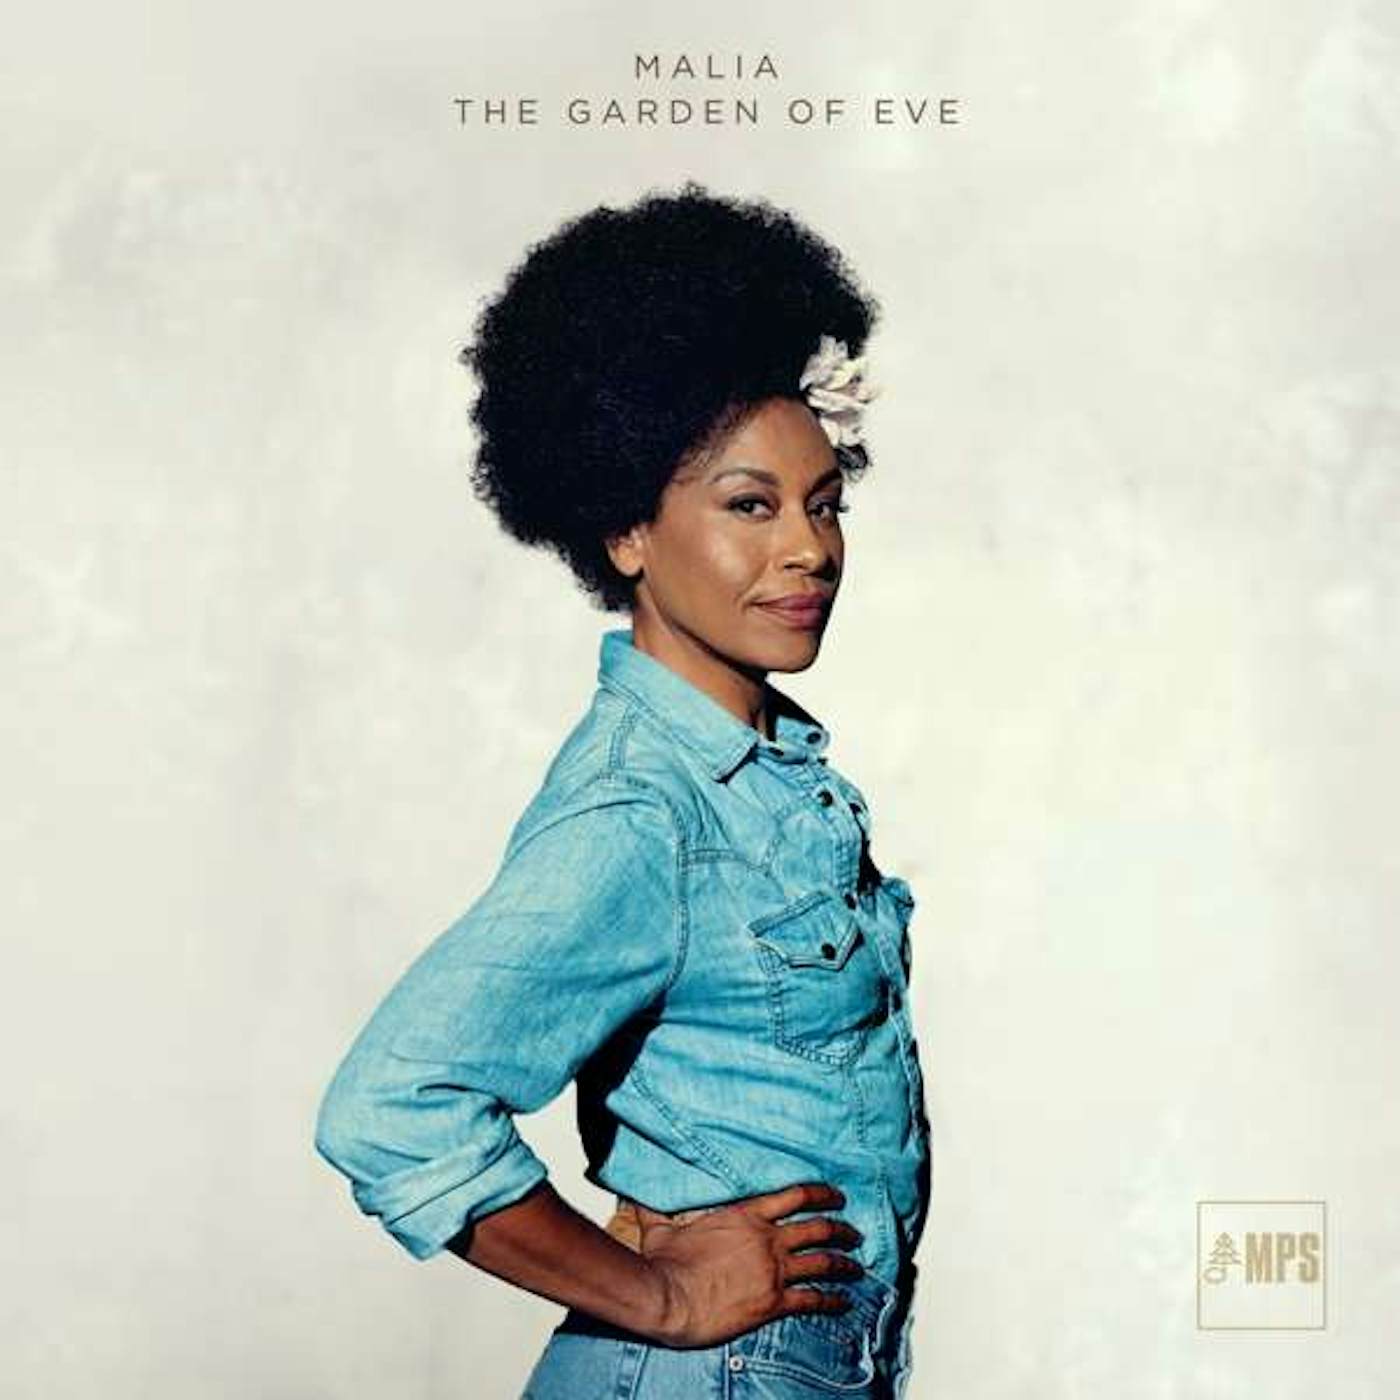 Malia GARDEN OF EVE Vinyl Record